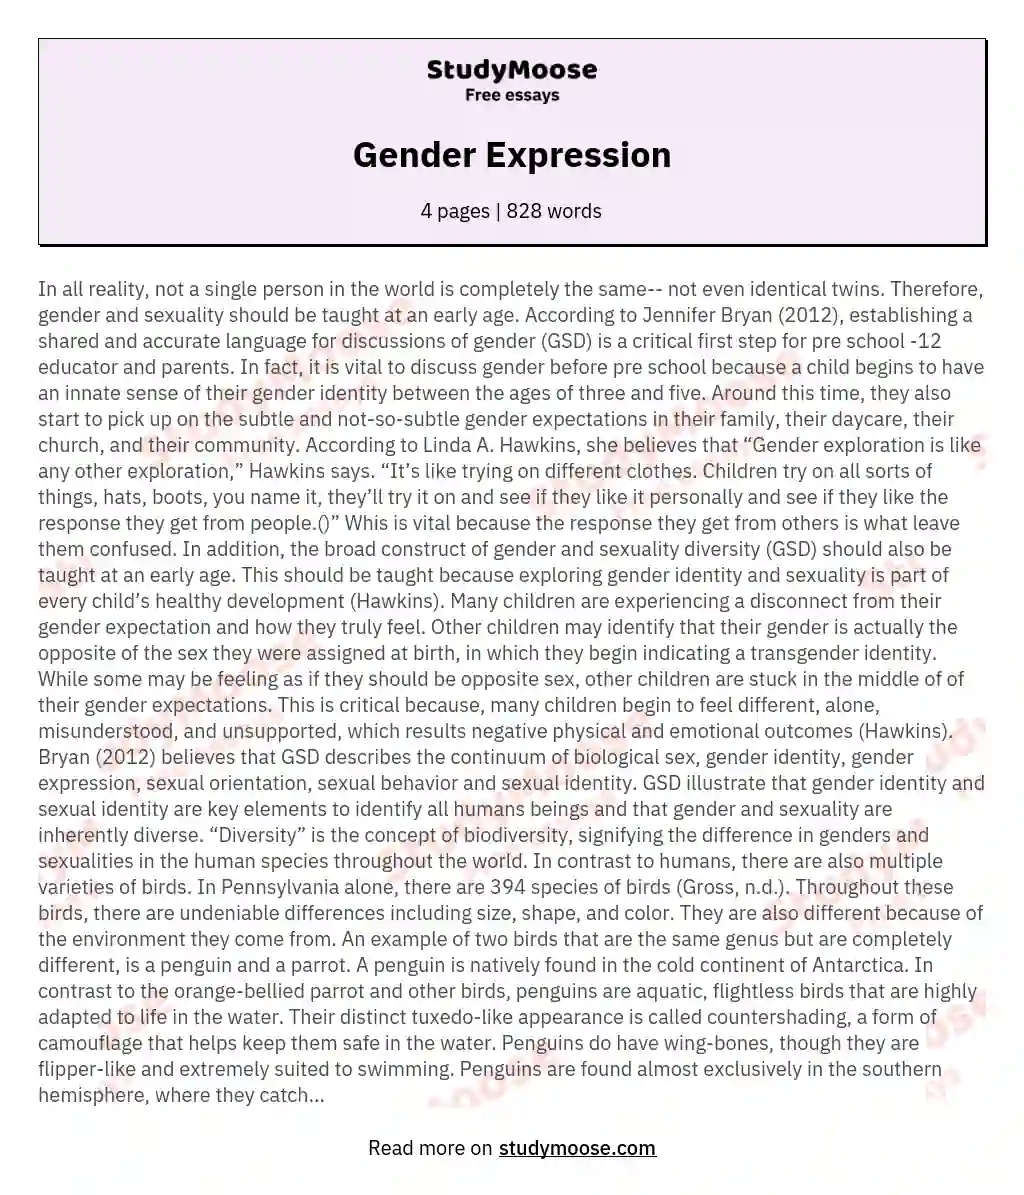 Gender Expression essay